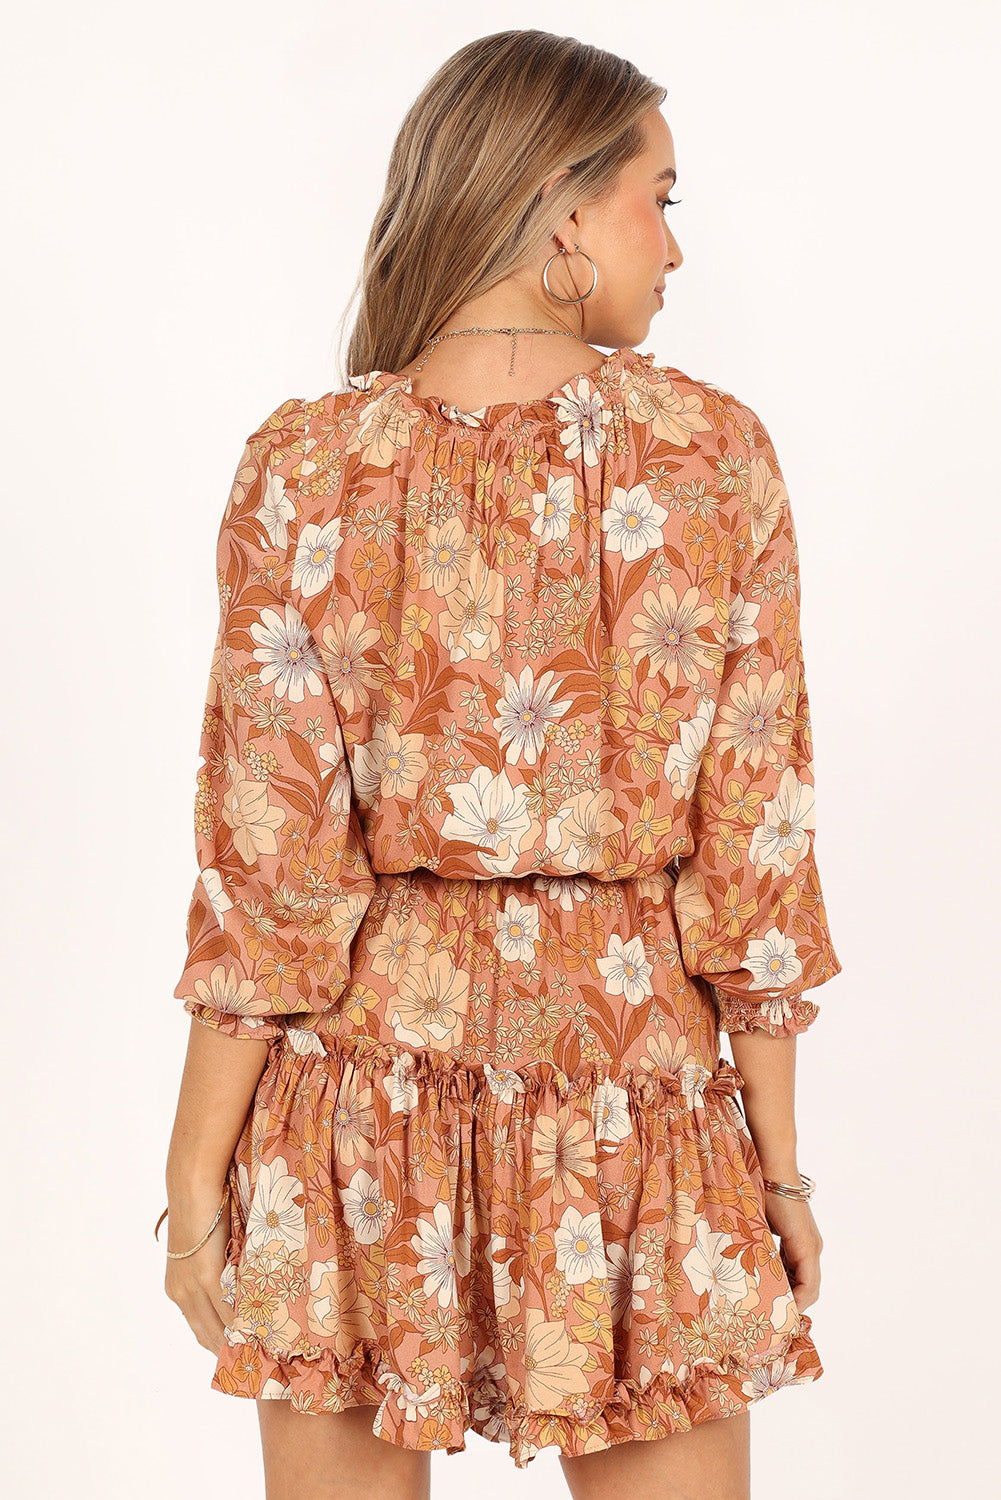 Camel Lace up Split Neck Tunic Floral Dress Dresses JT's Designer Fashion